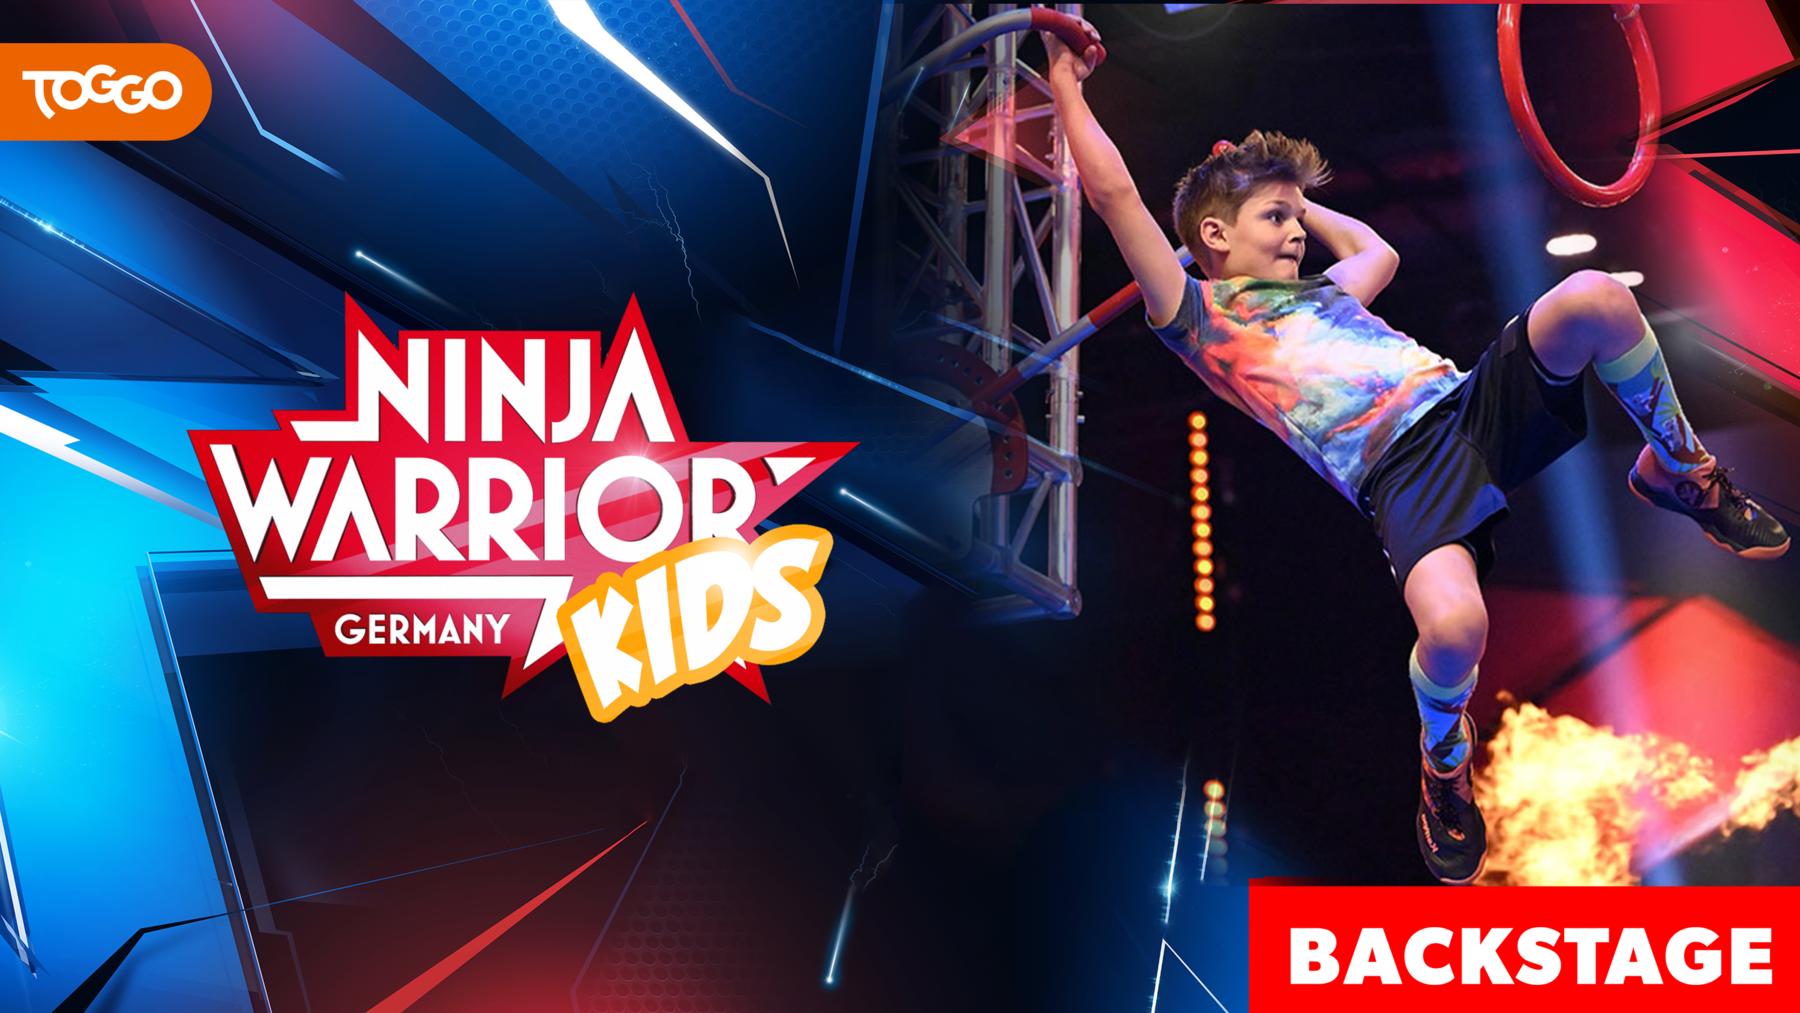 Ninja Warrior Germany Kids 2021 Backstage